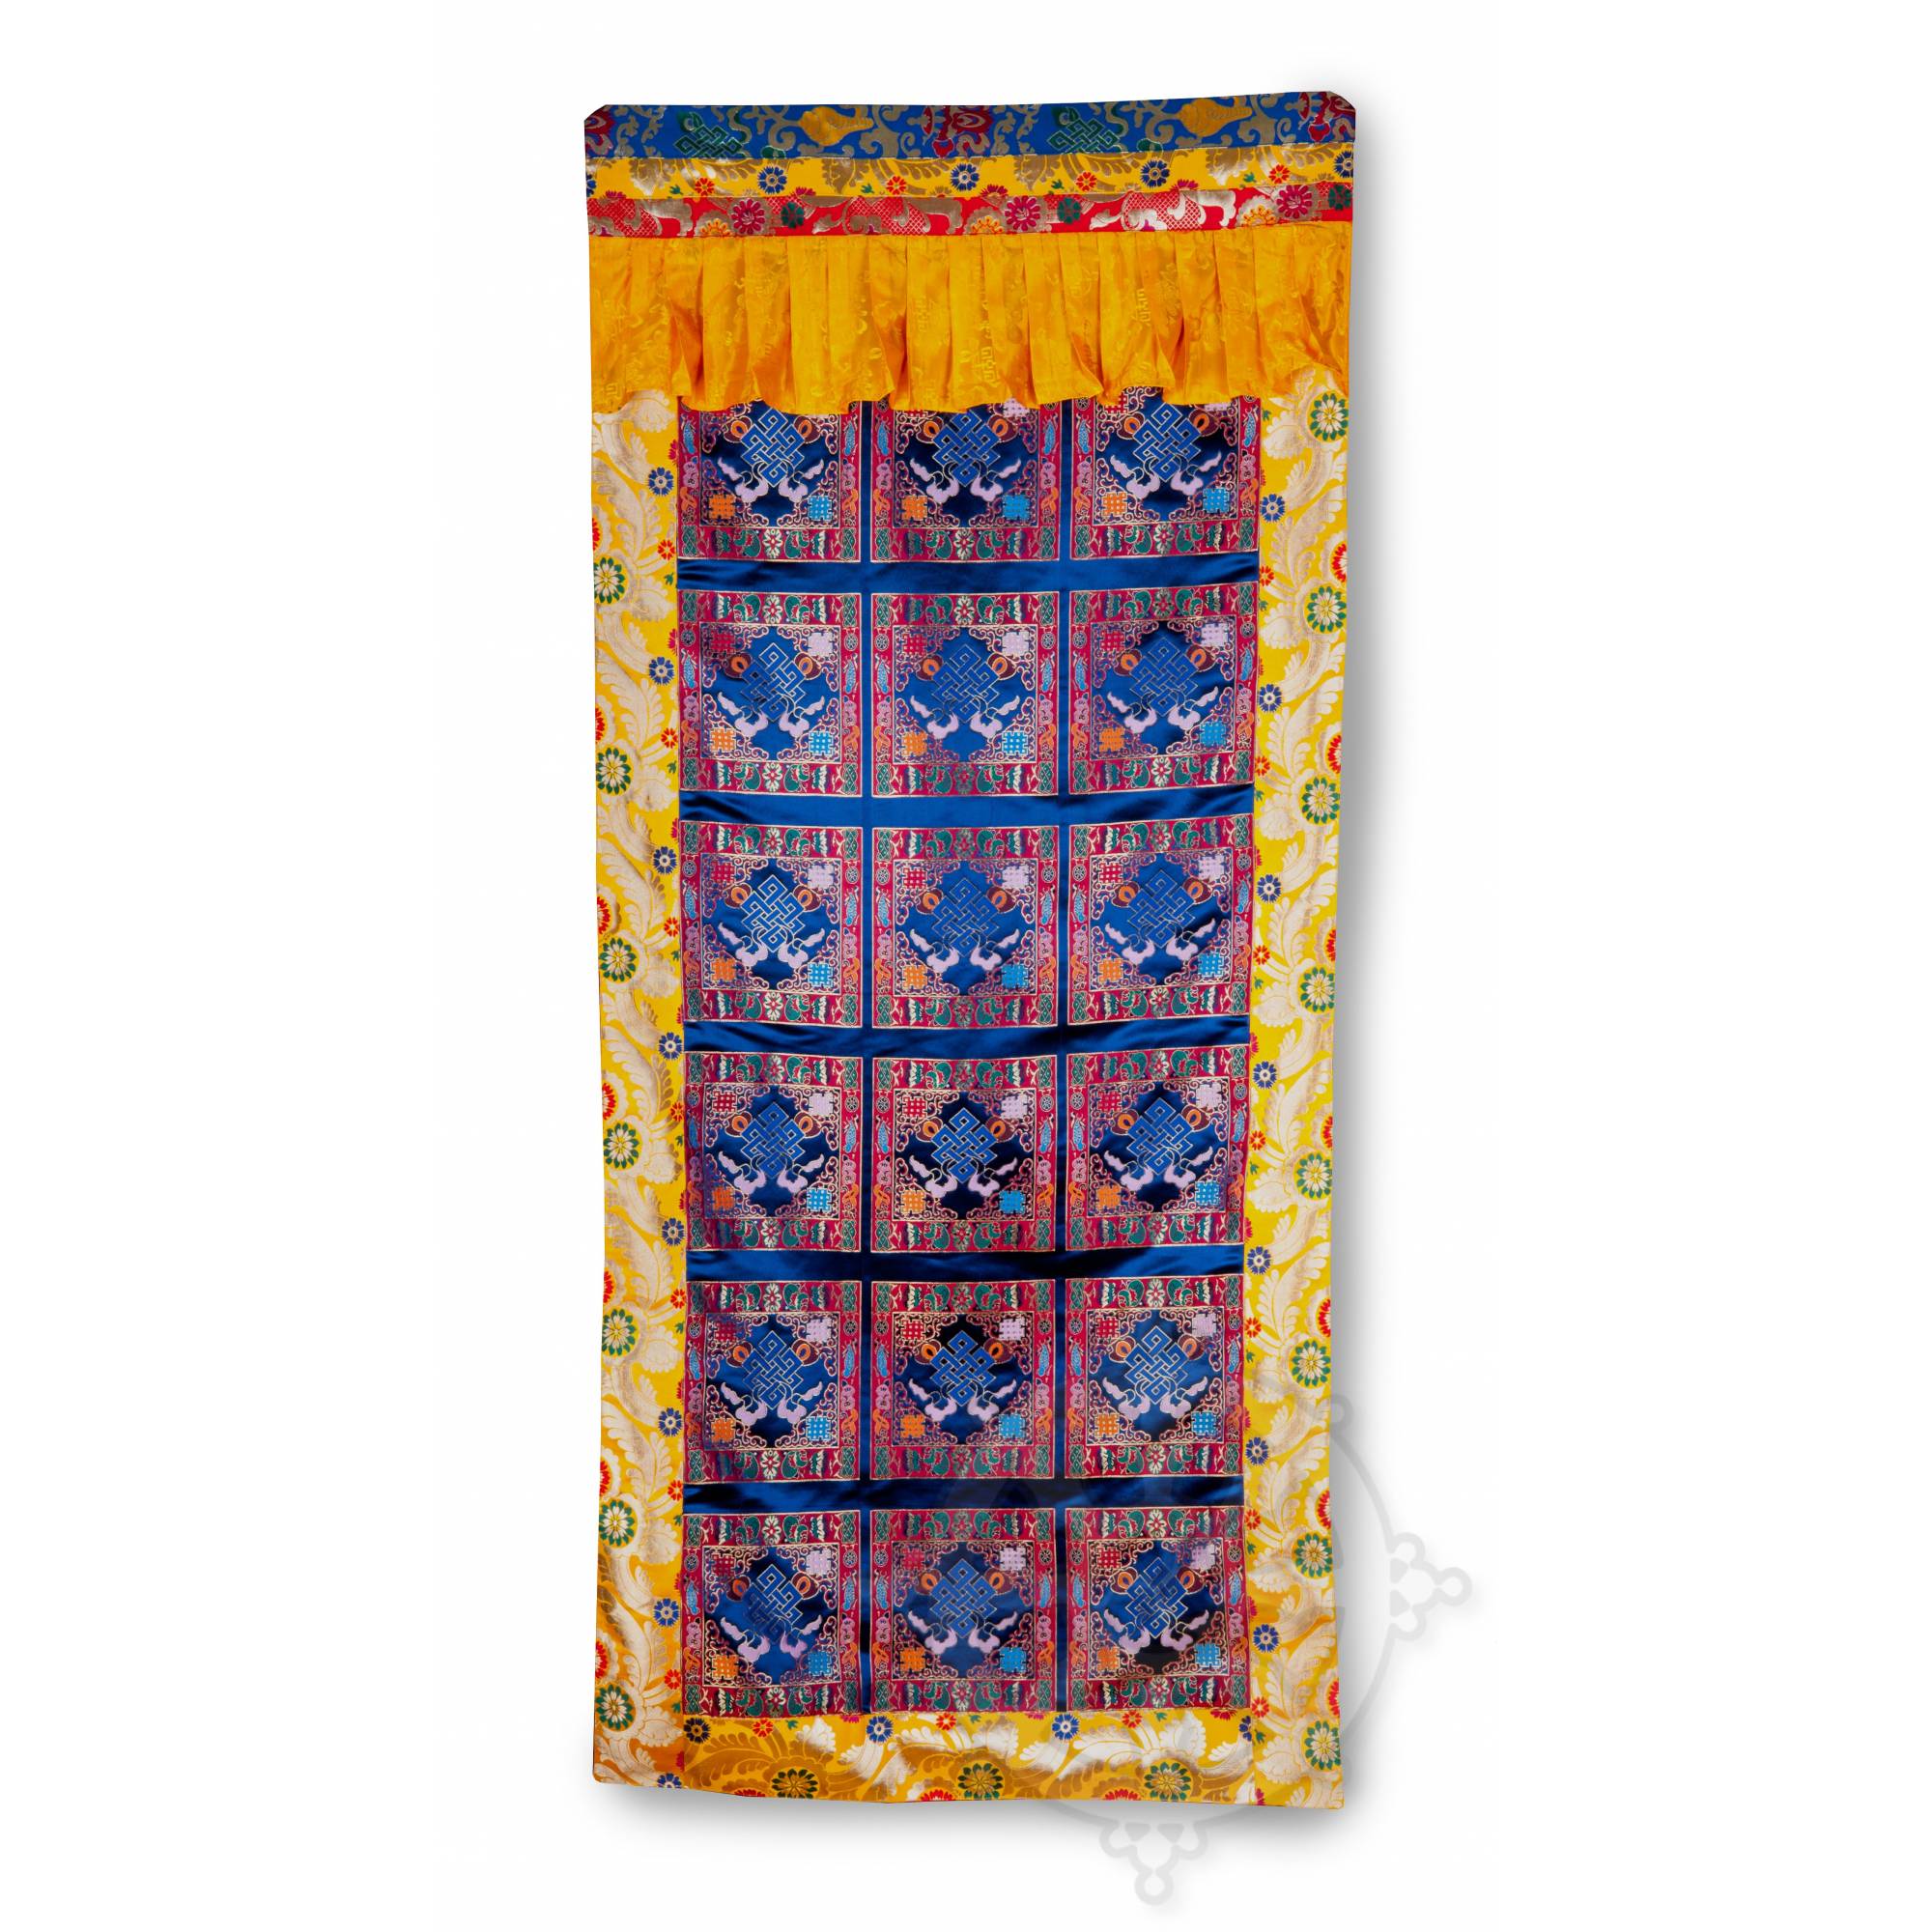 Cortina puerta tibetana Nudo infinito de seda bordada, A. 190cm x A. 90cm) - Arte de